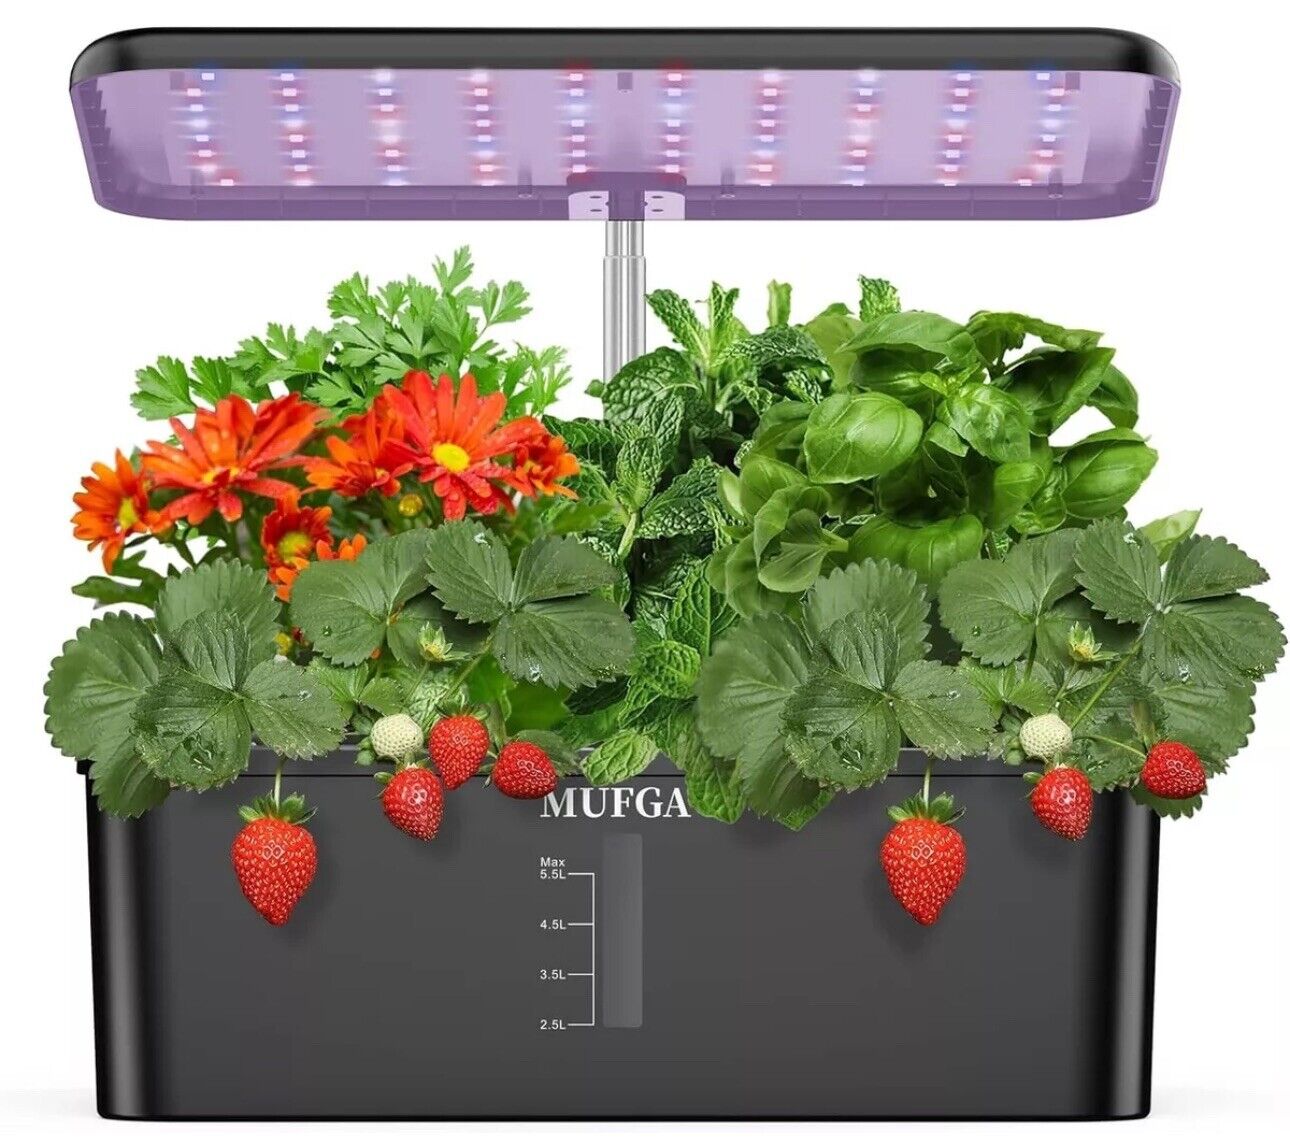 Herb Garden Hydroponics Growing System - MUFGA 12 Pods Indoor Gardening System